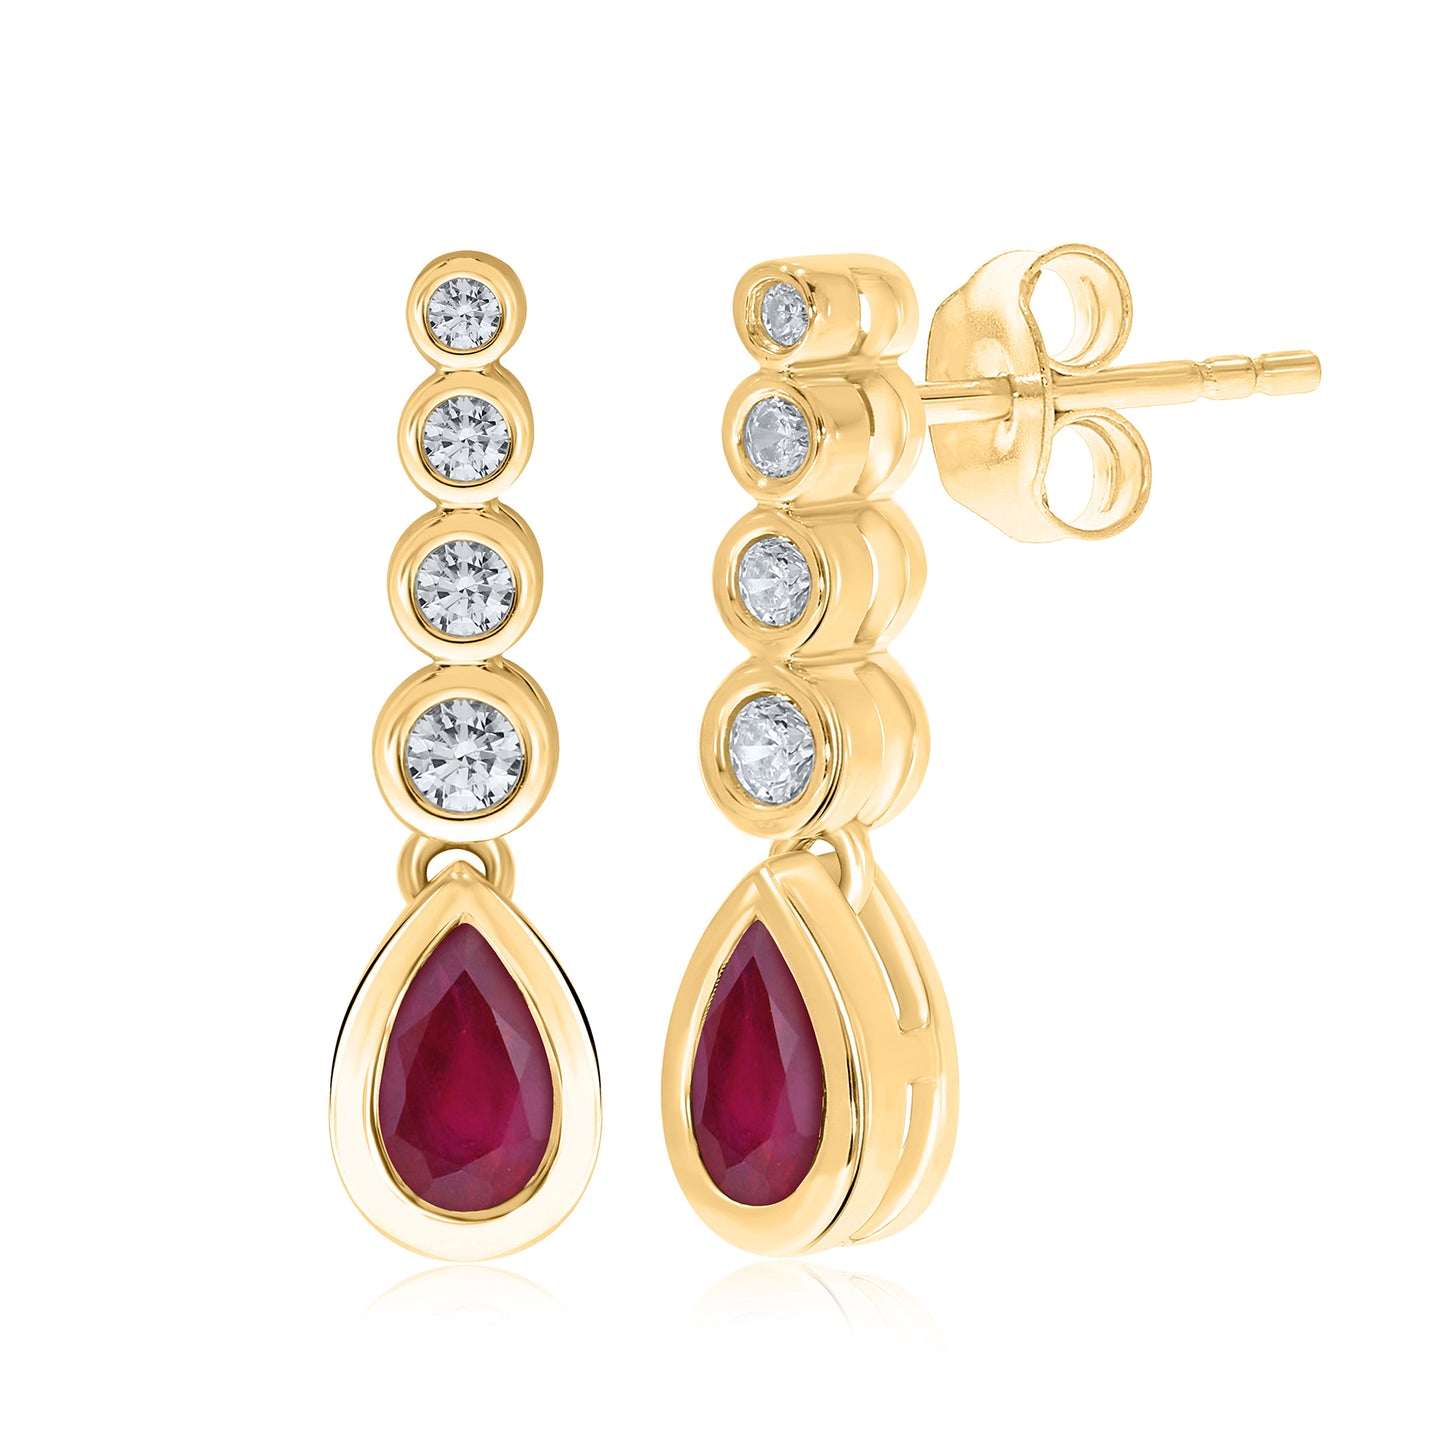 9ct Yellow Gold Ruby & Diamond Drop Earrings